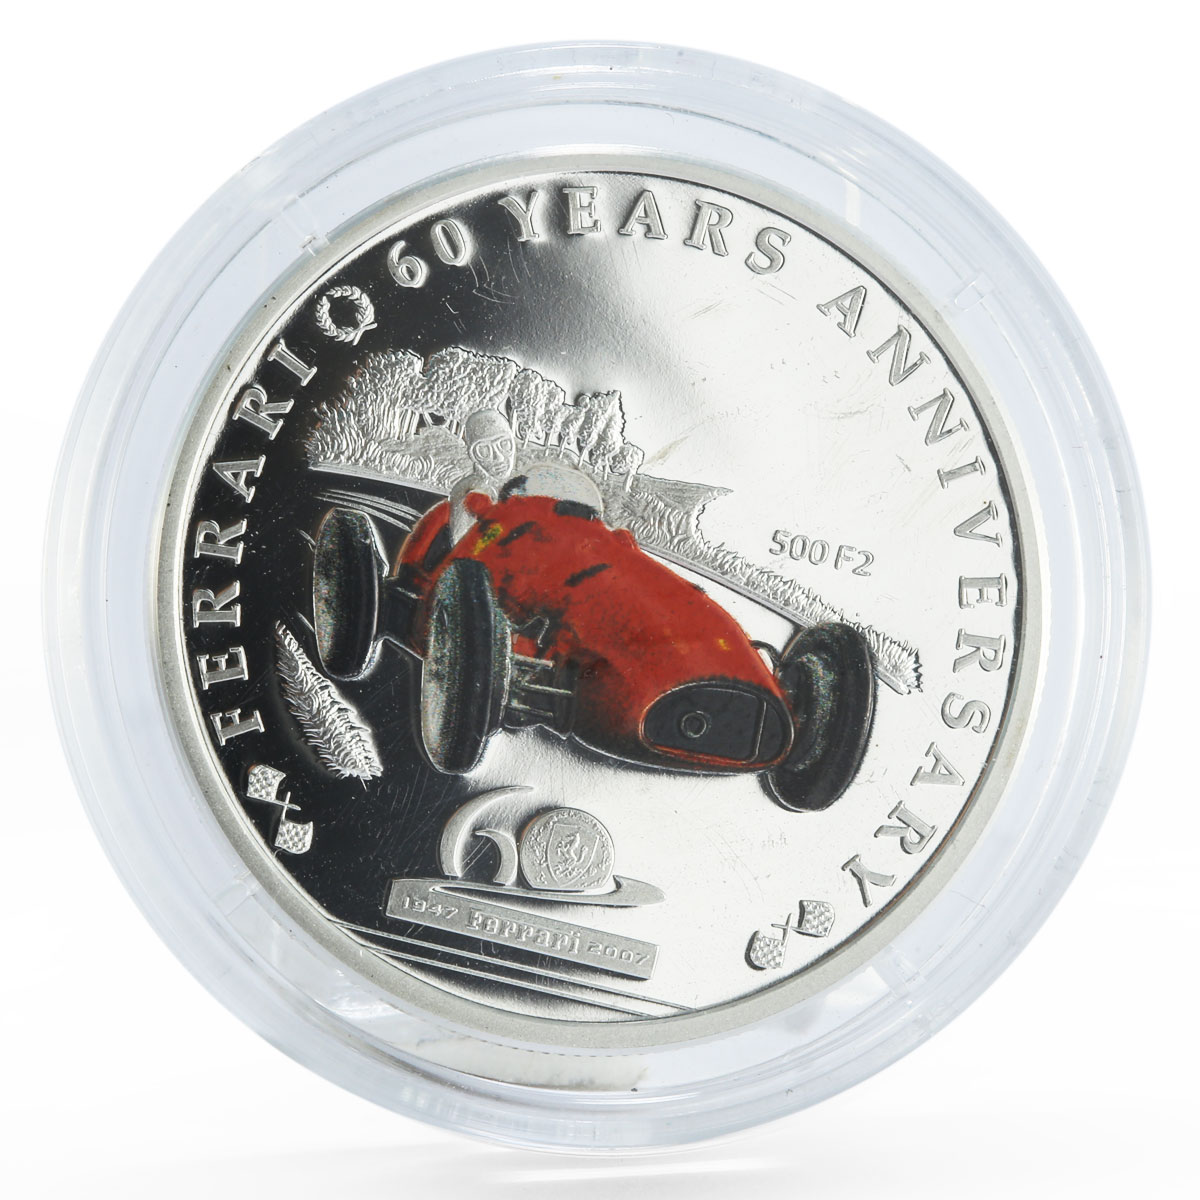 Palau 2 dollars 60th Anniversary of Ferrari 500 F2 Bolide silver coin 2007